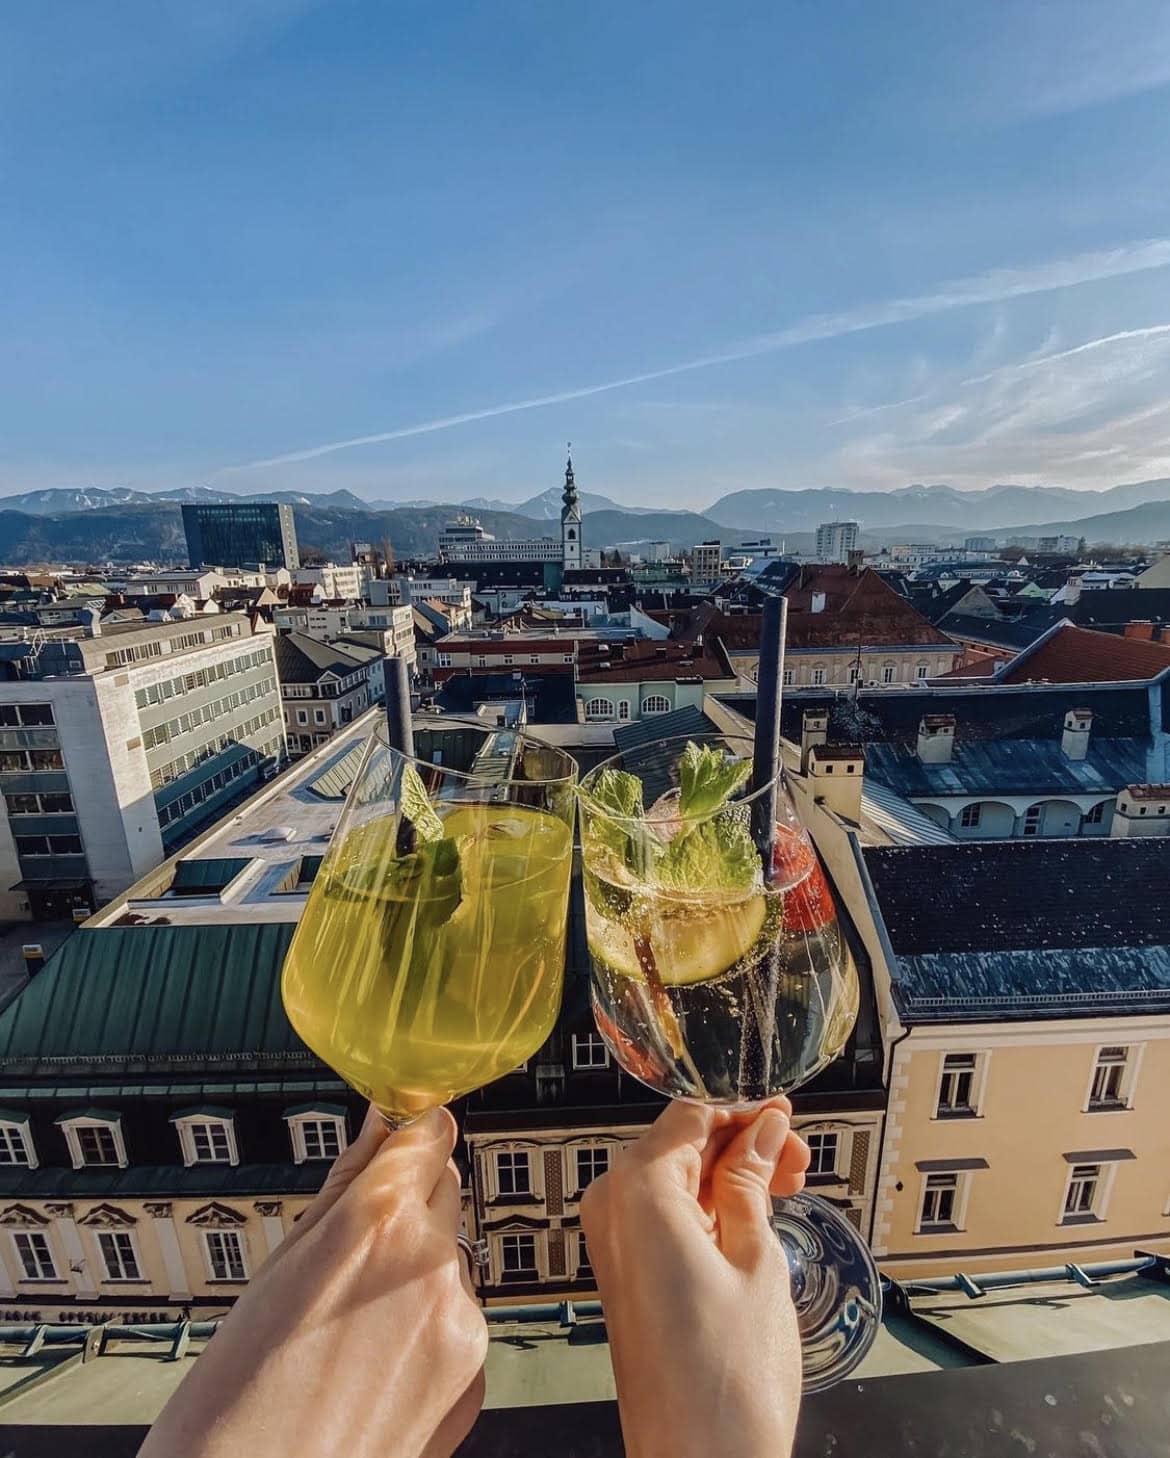 Cheers mit kühlen Cocktails in der Rooftop-Bar 19null7 in Klagenfurt